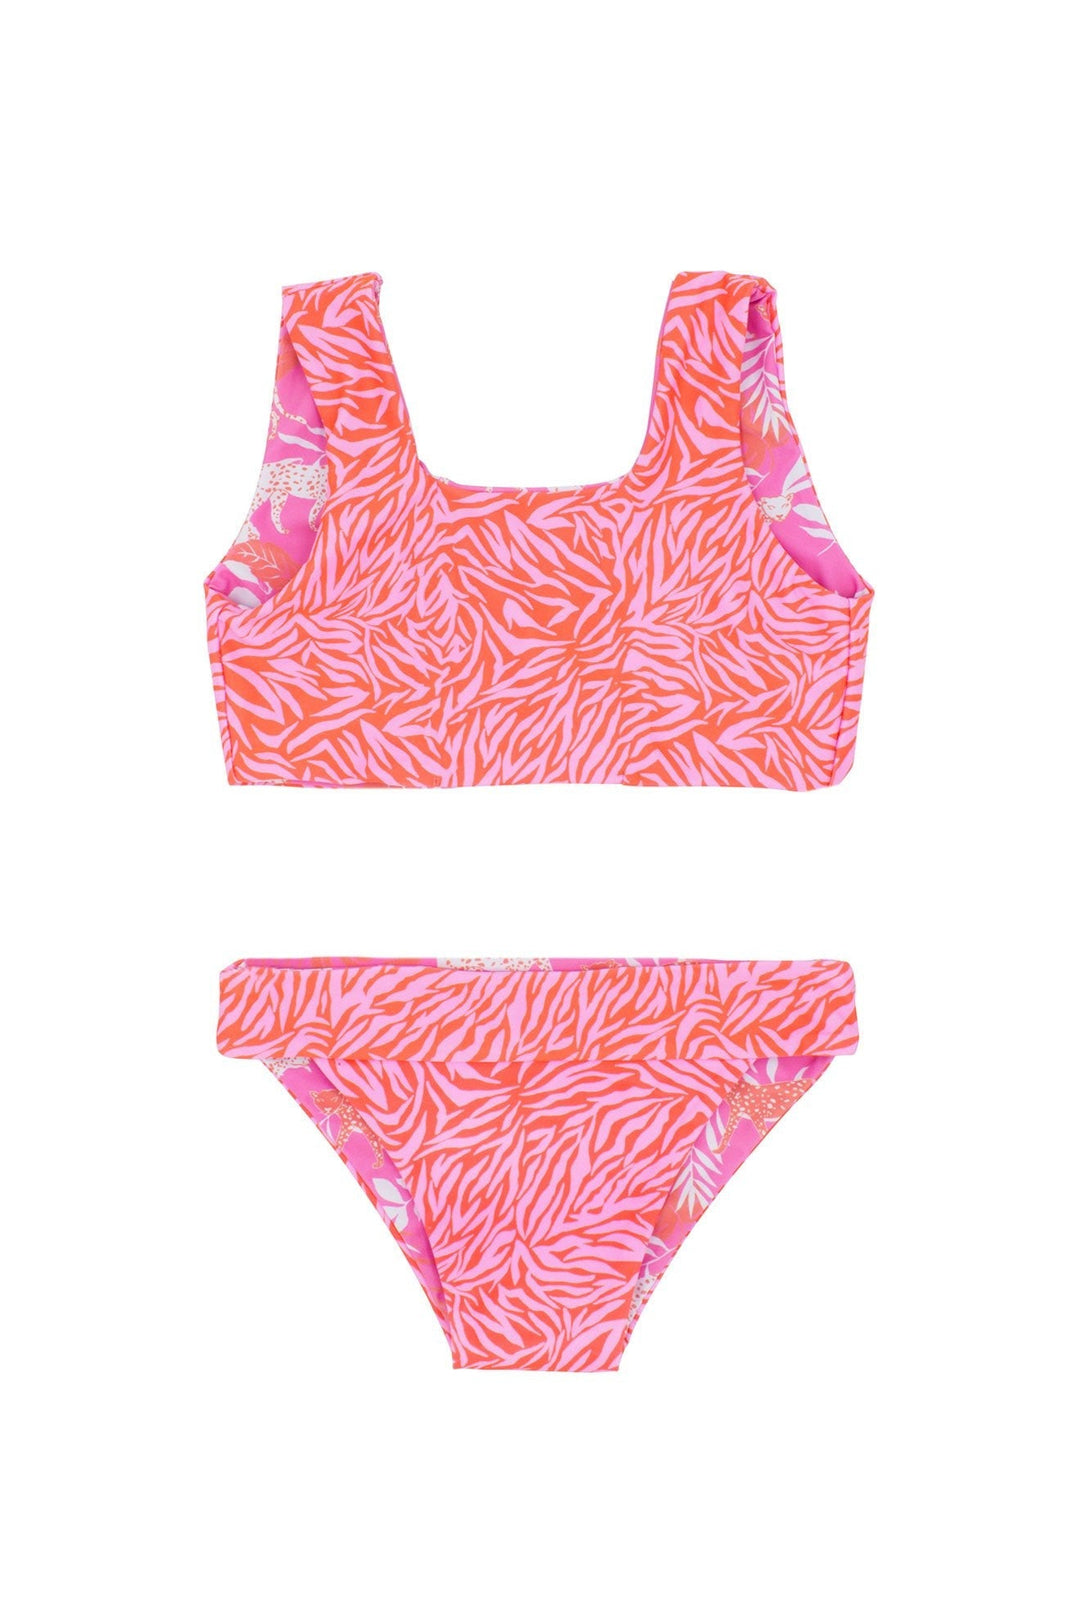 Girls Island Hopper Reversible Bikini by Feather 4 Arrow